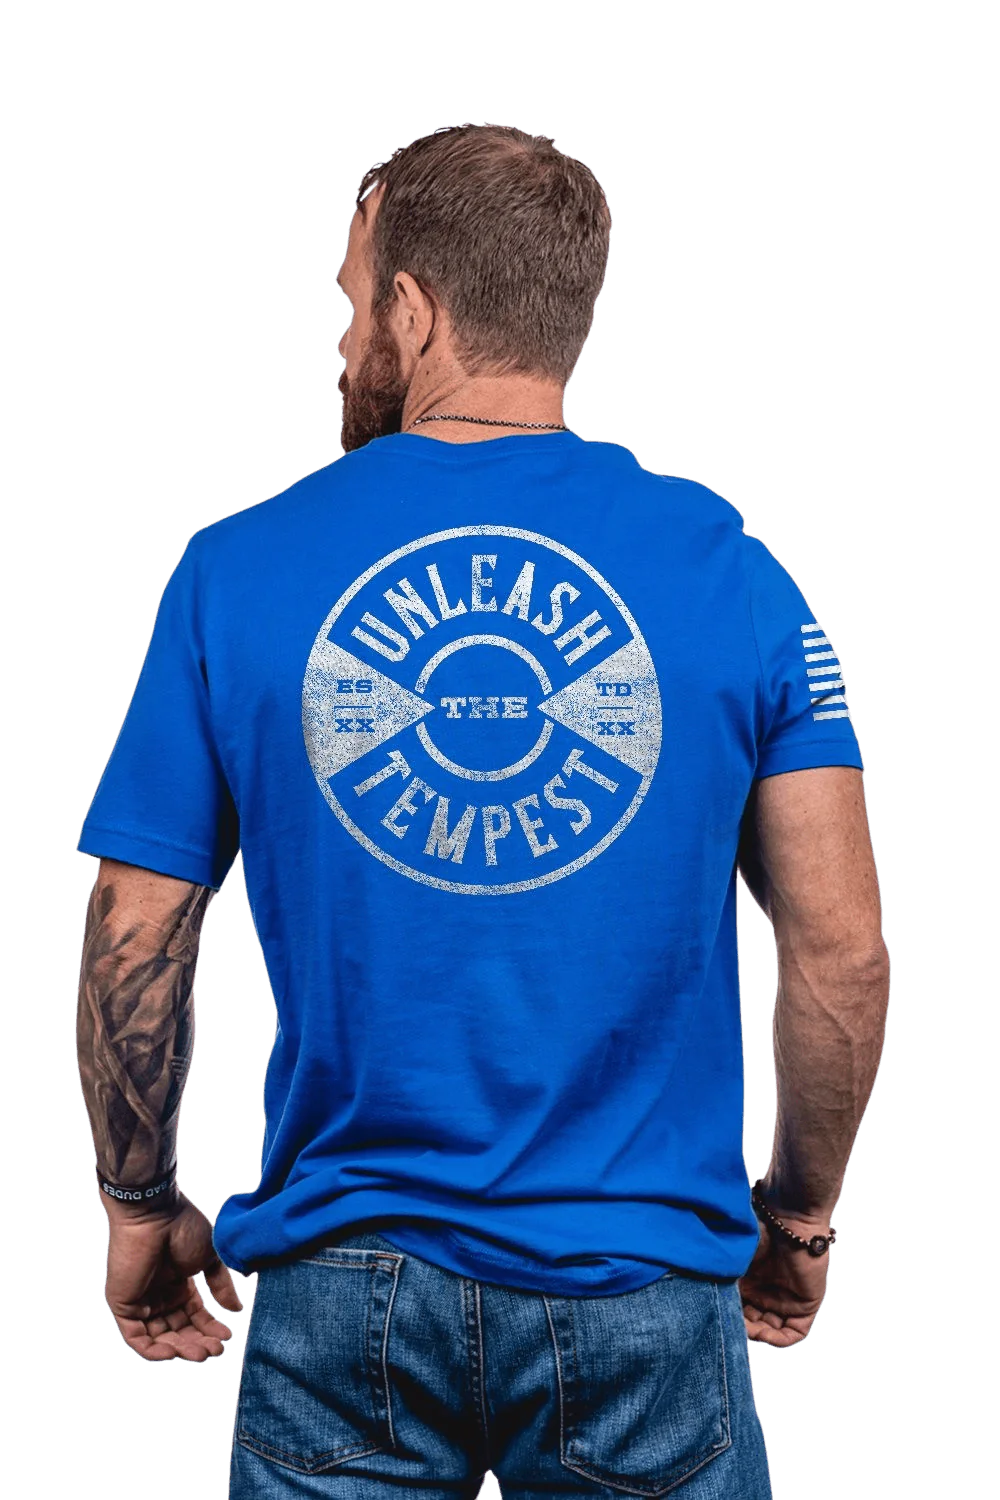 Nine Line Men's T-Shirt - SFG- Tempest posted by ProdOrigin USA in Men's Apparel